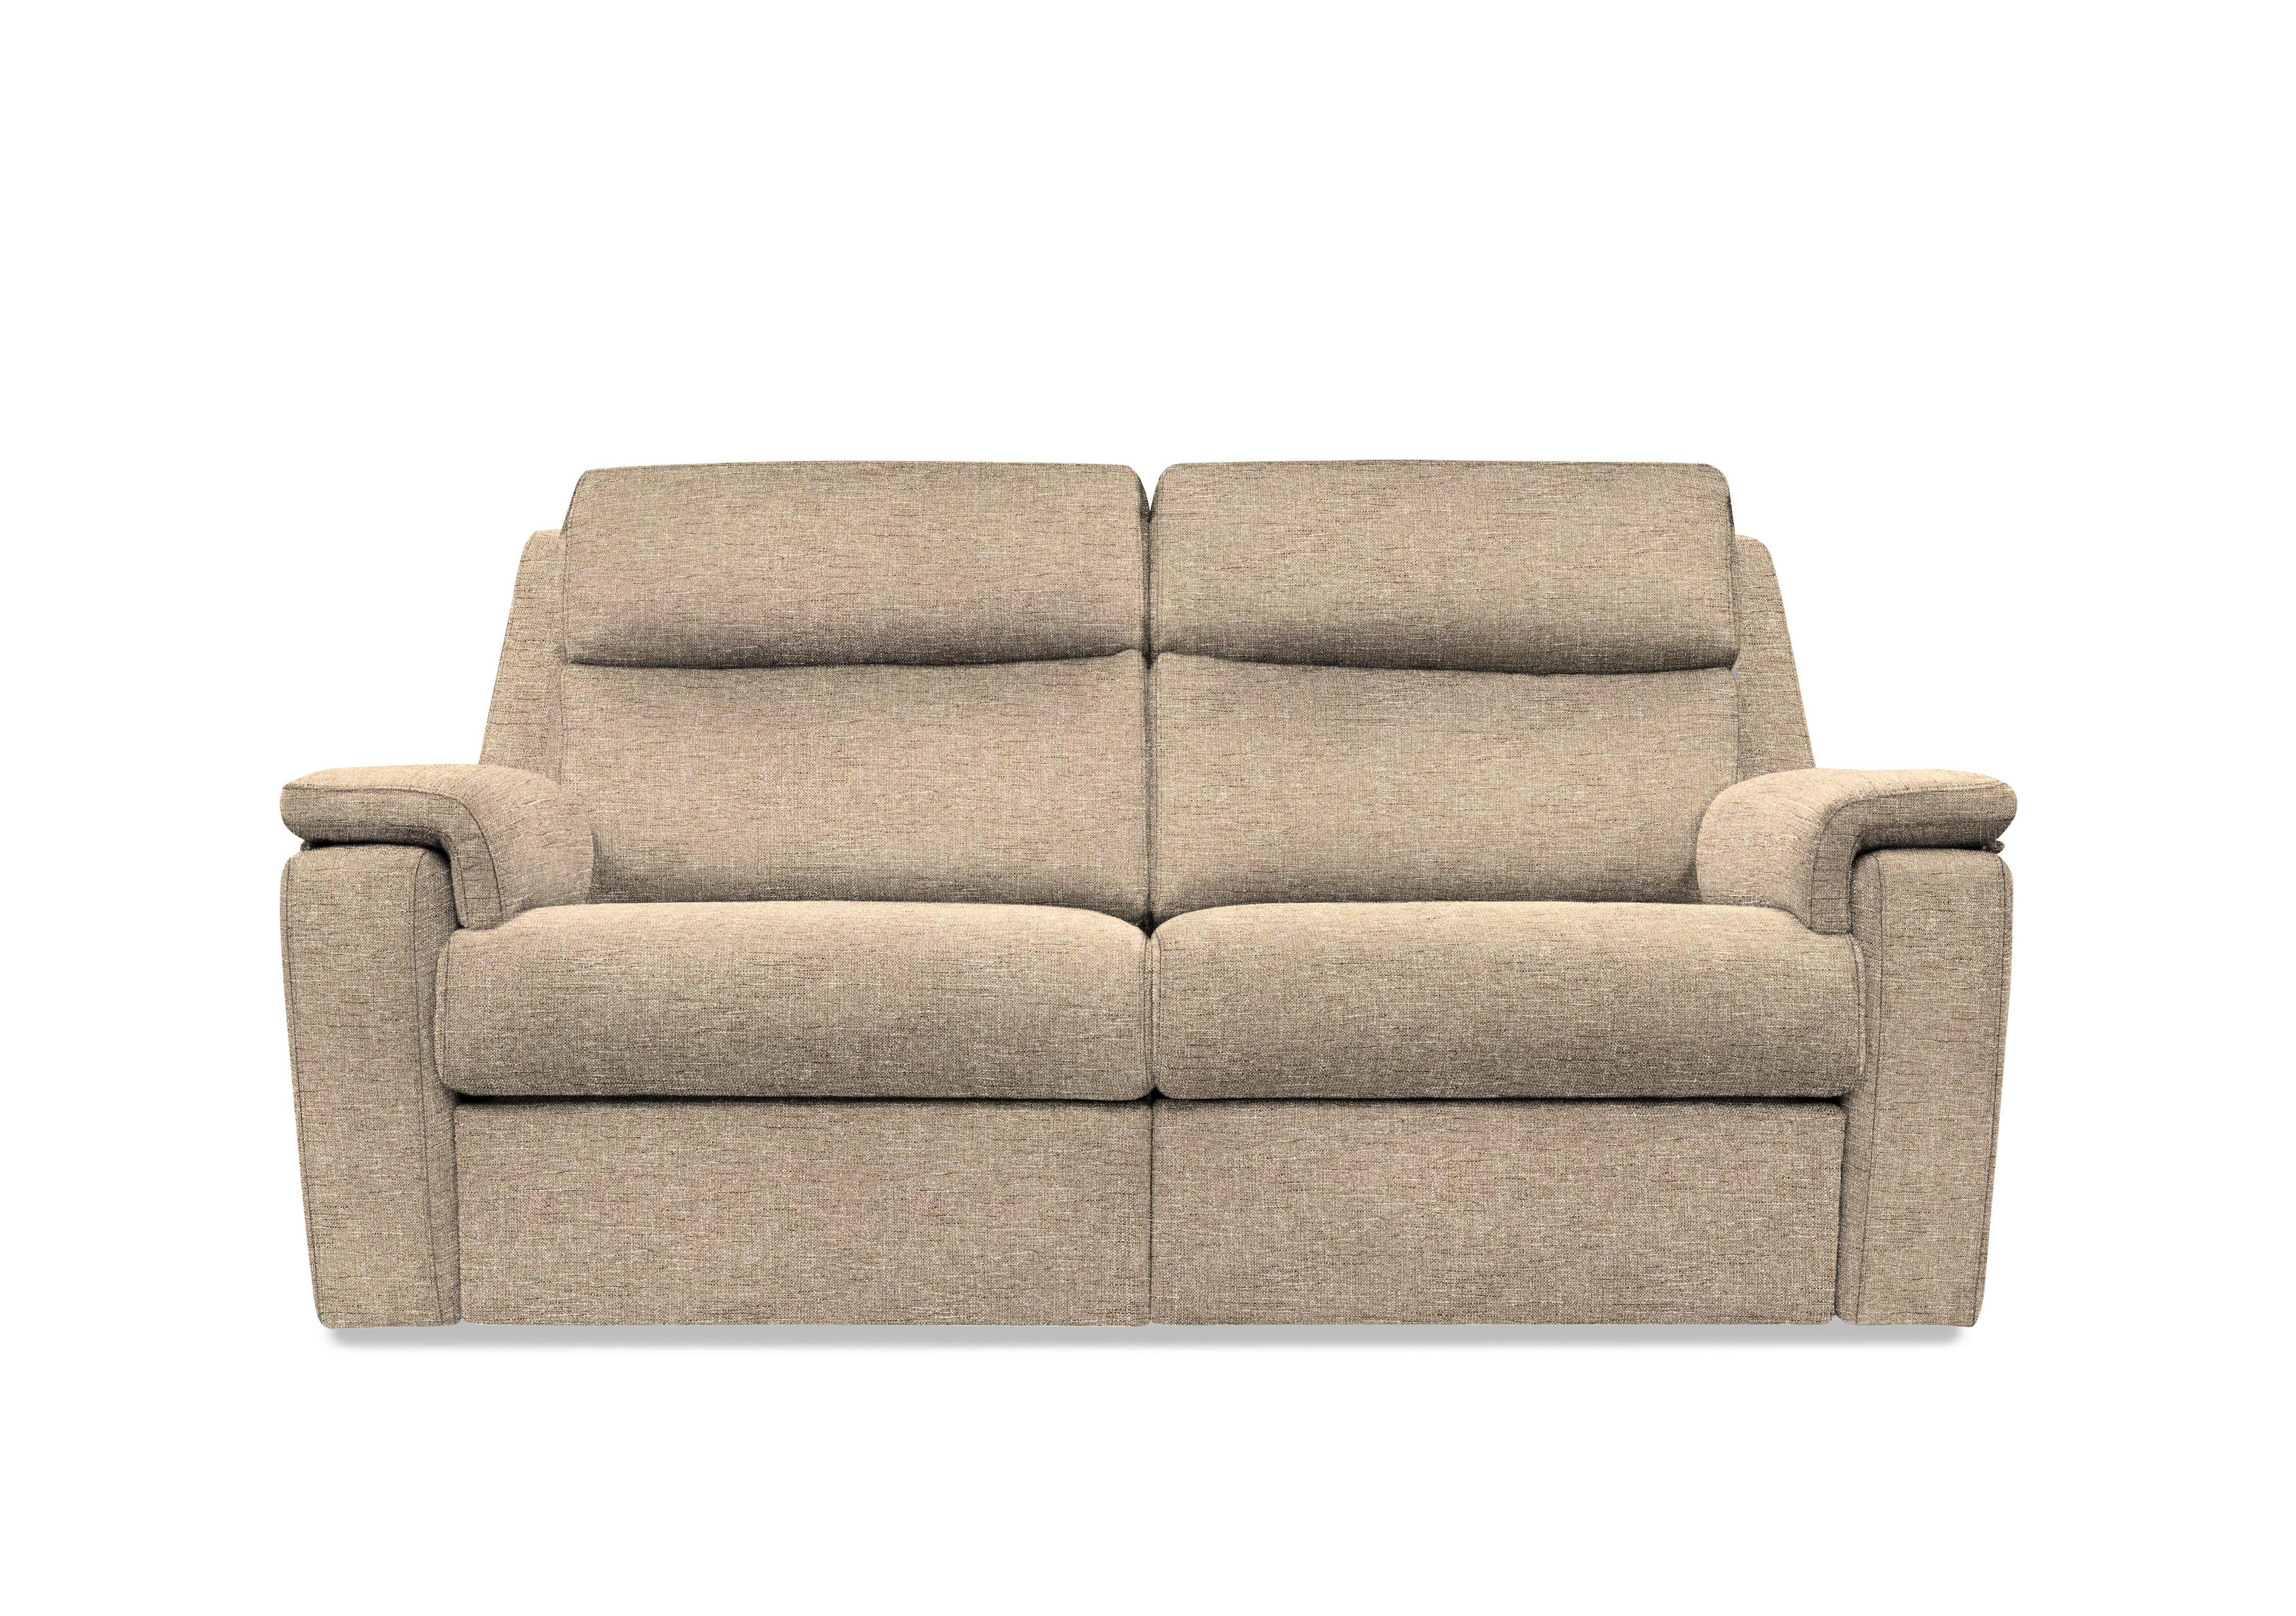 Thornbury 3 Seater Fabric Sofa in A022 Dapple Sparrow on Furniture Village